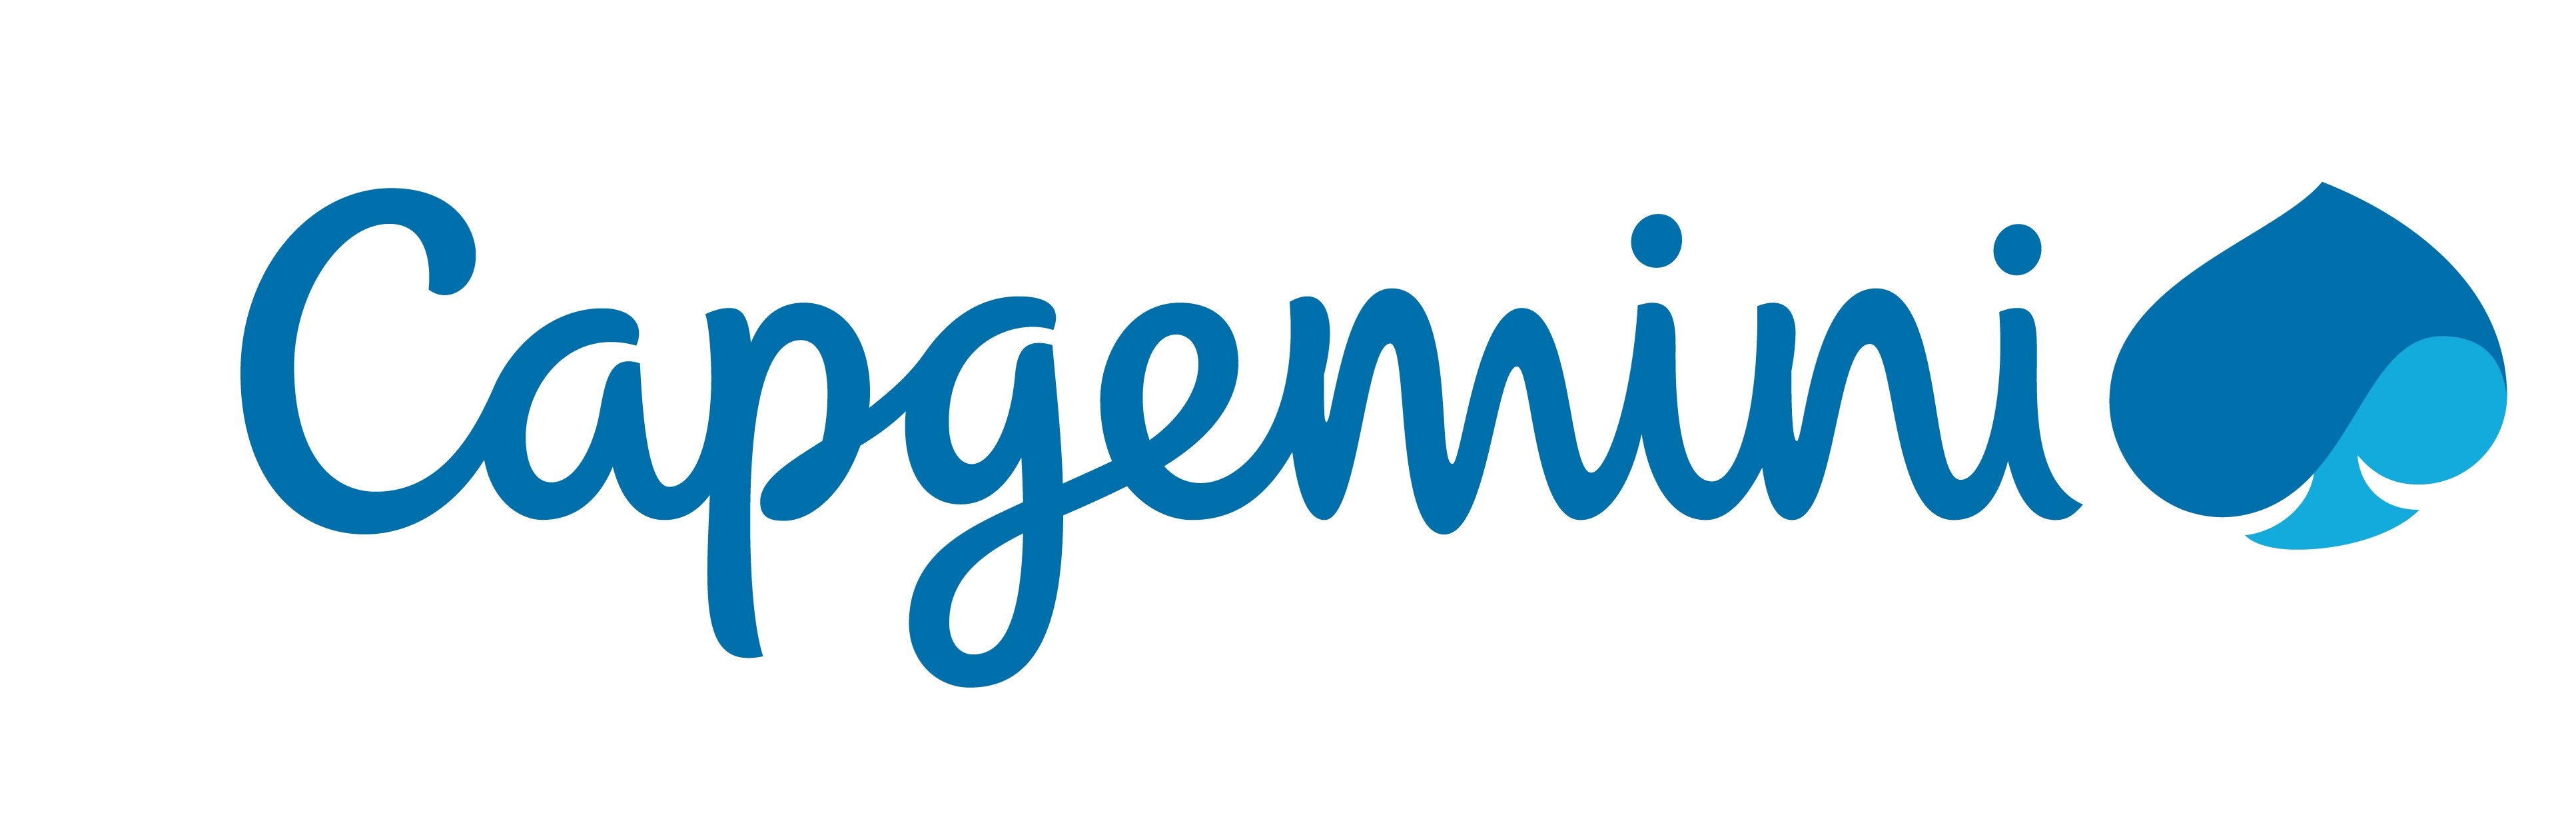 Capgemini-Logo-1